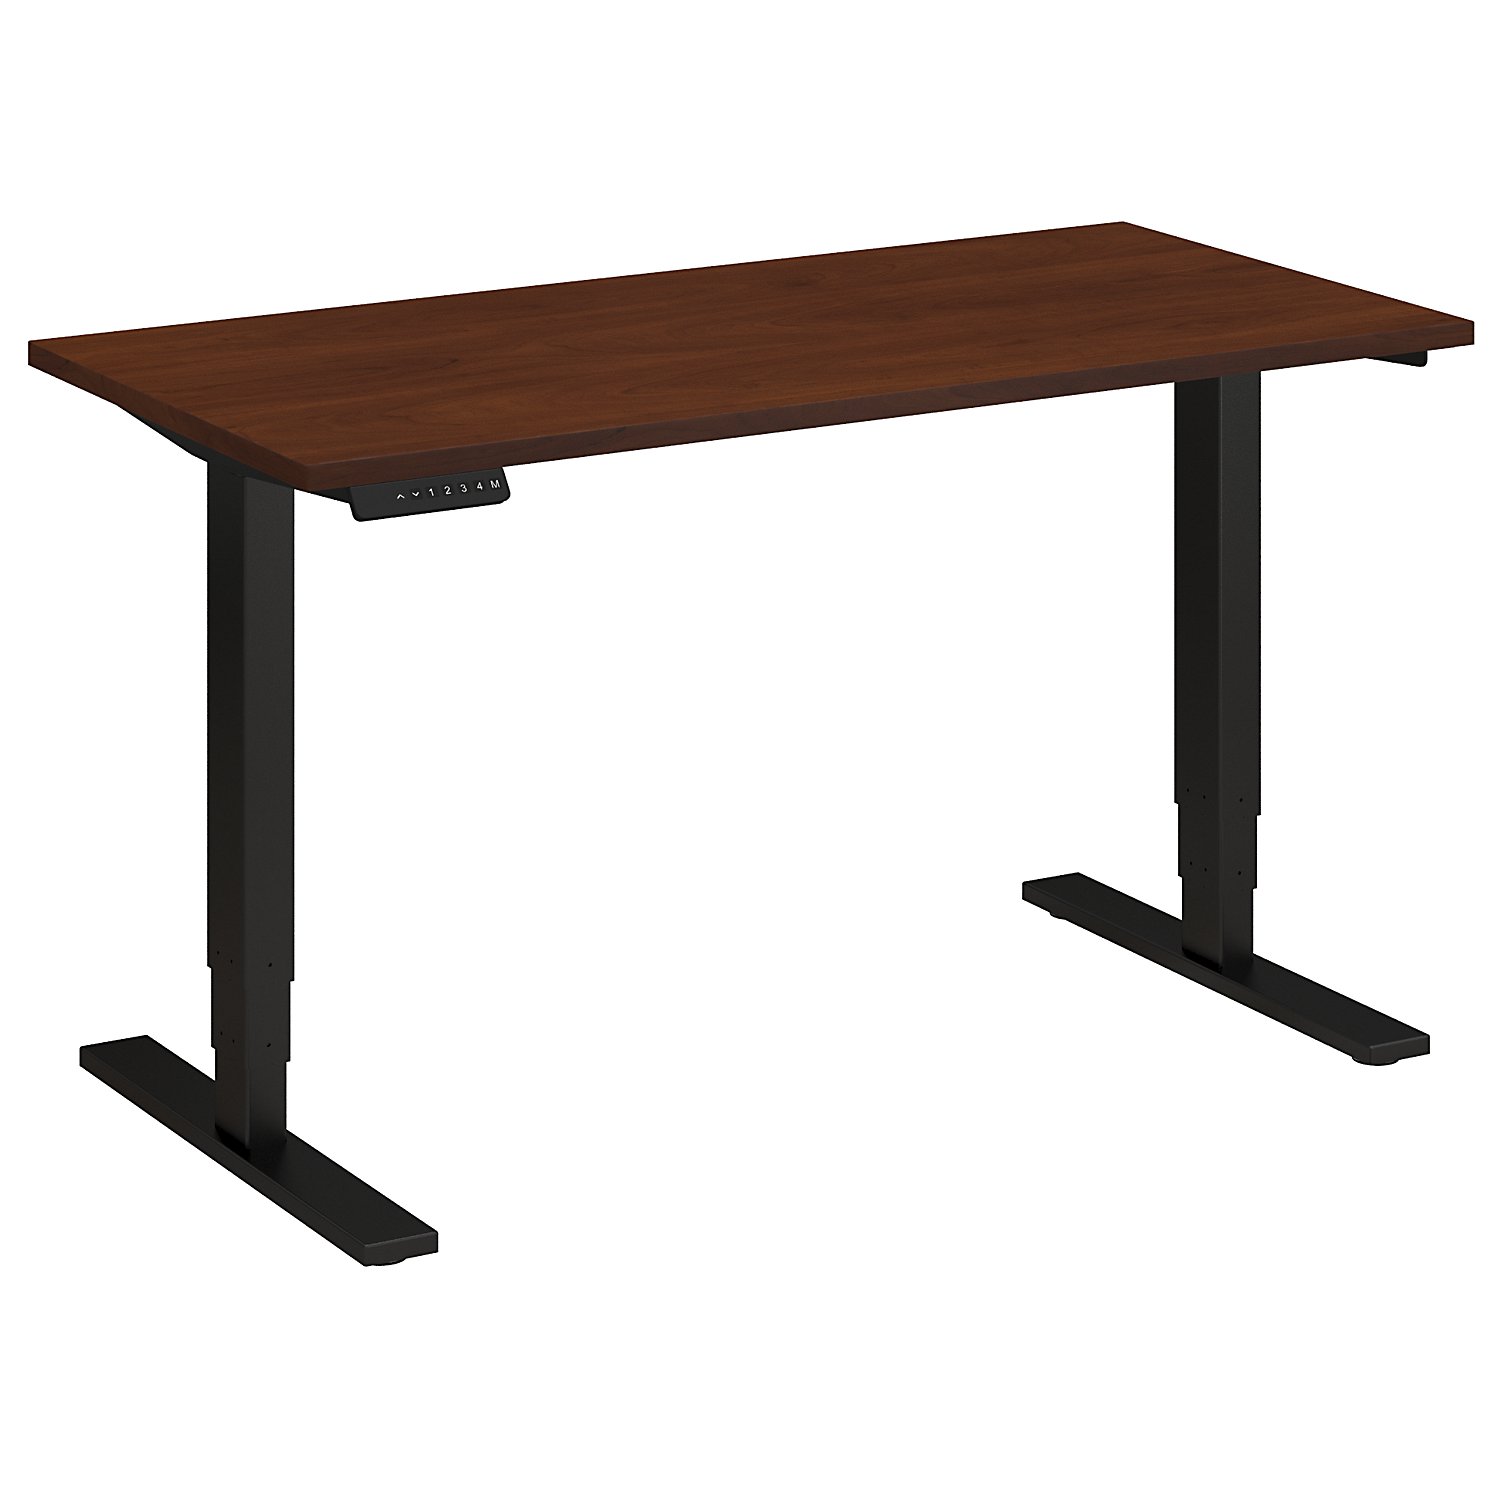 Adjustable Height Desks from BBF - Shown in Hansen Cherry woodgrain laminate top and black base